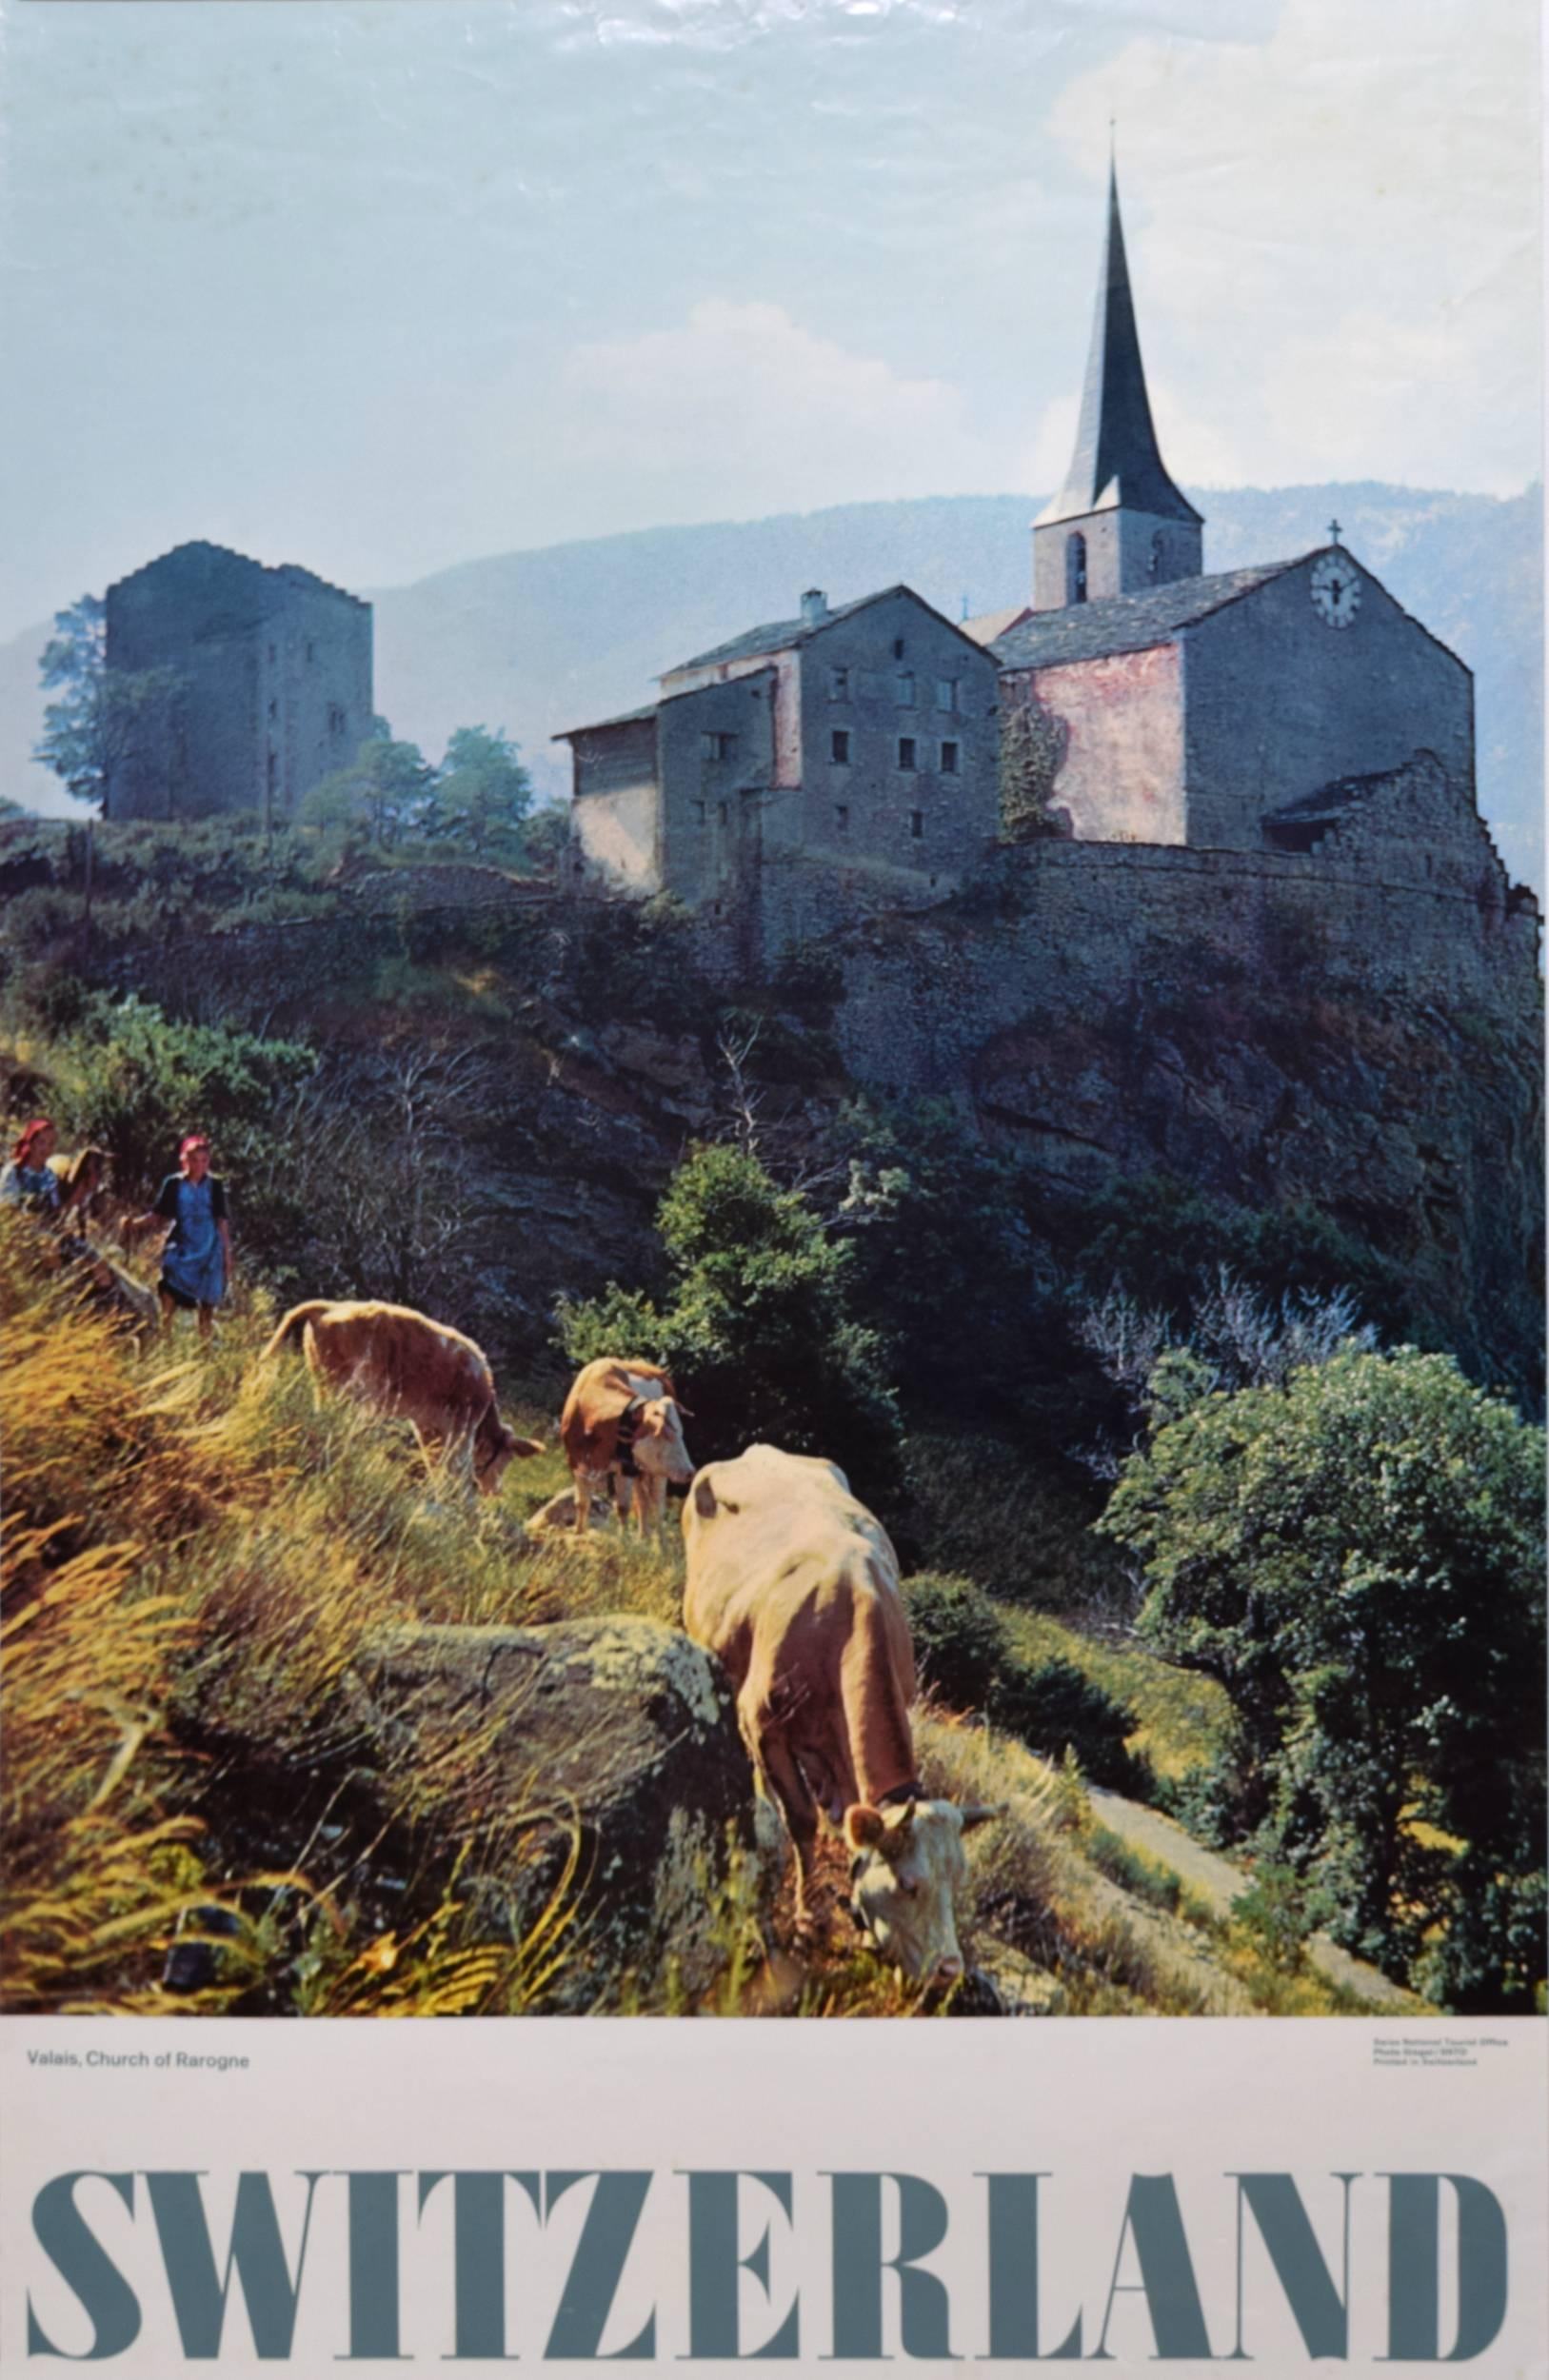 Switzerland (Valais, Church of Rarogne) Photographic Travel Poster Mountains  - Print by Philipp Giegel